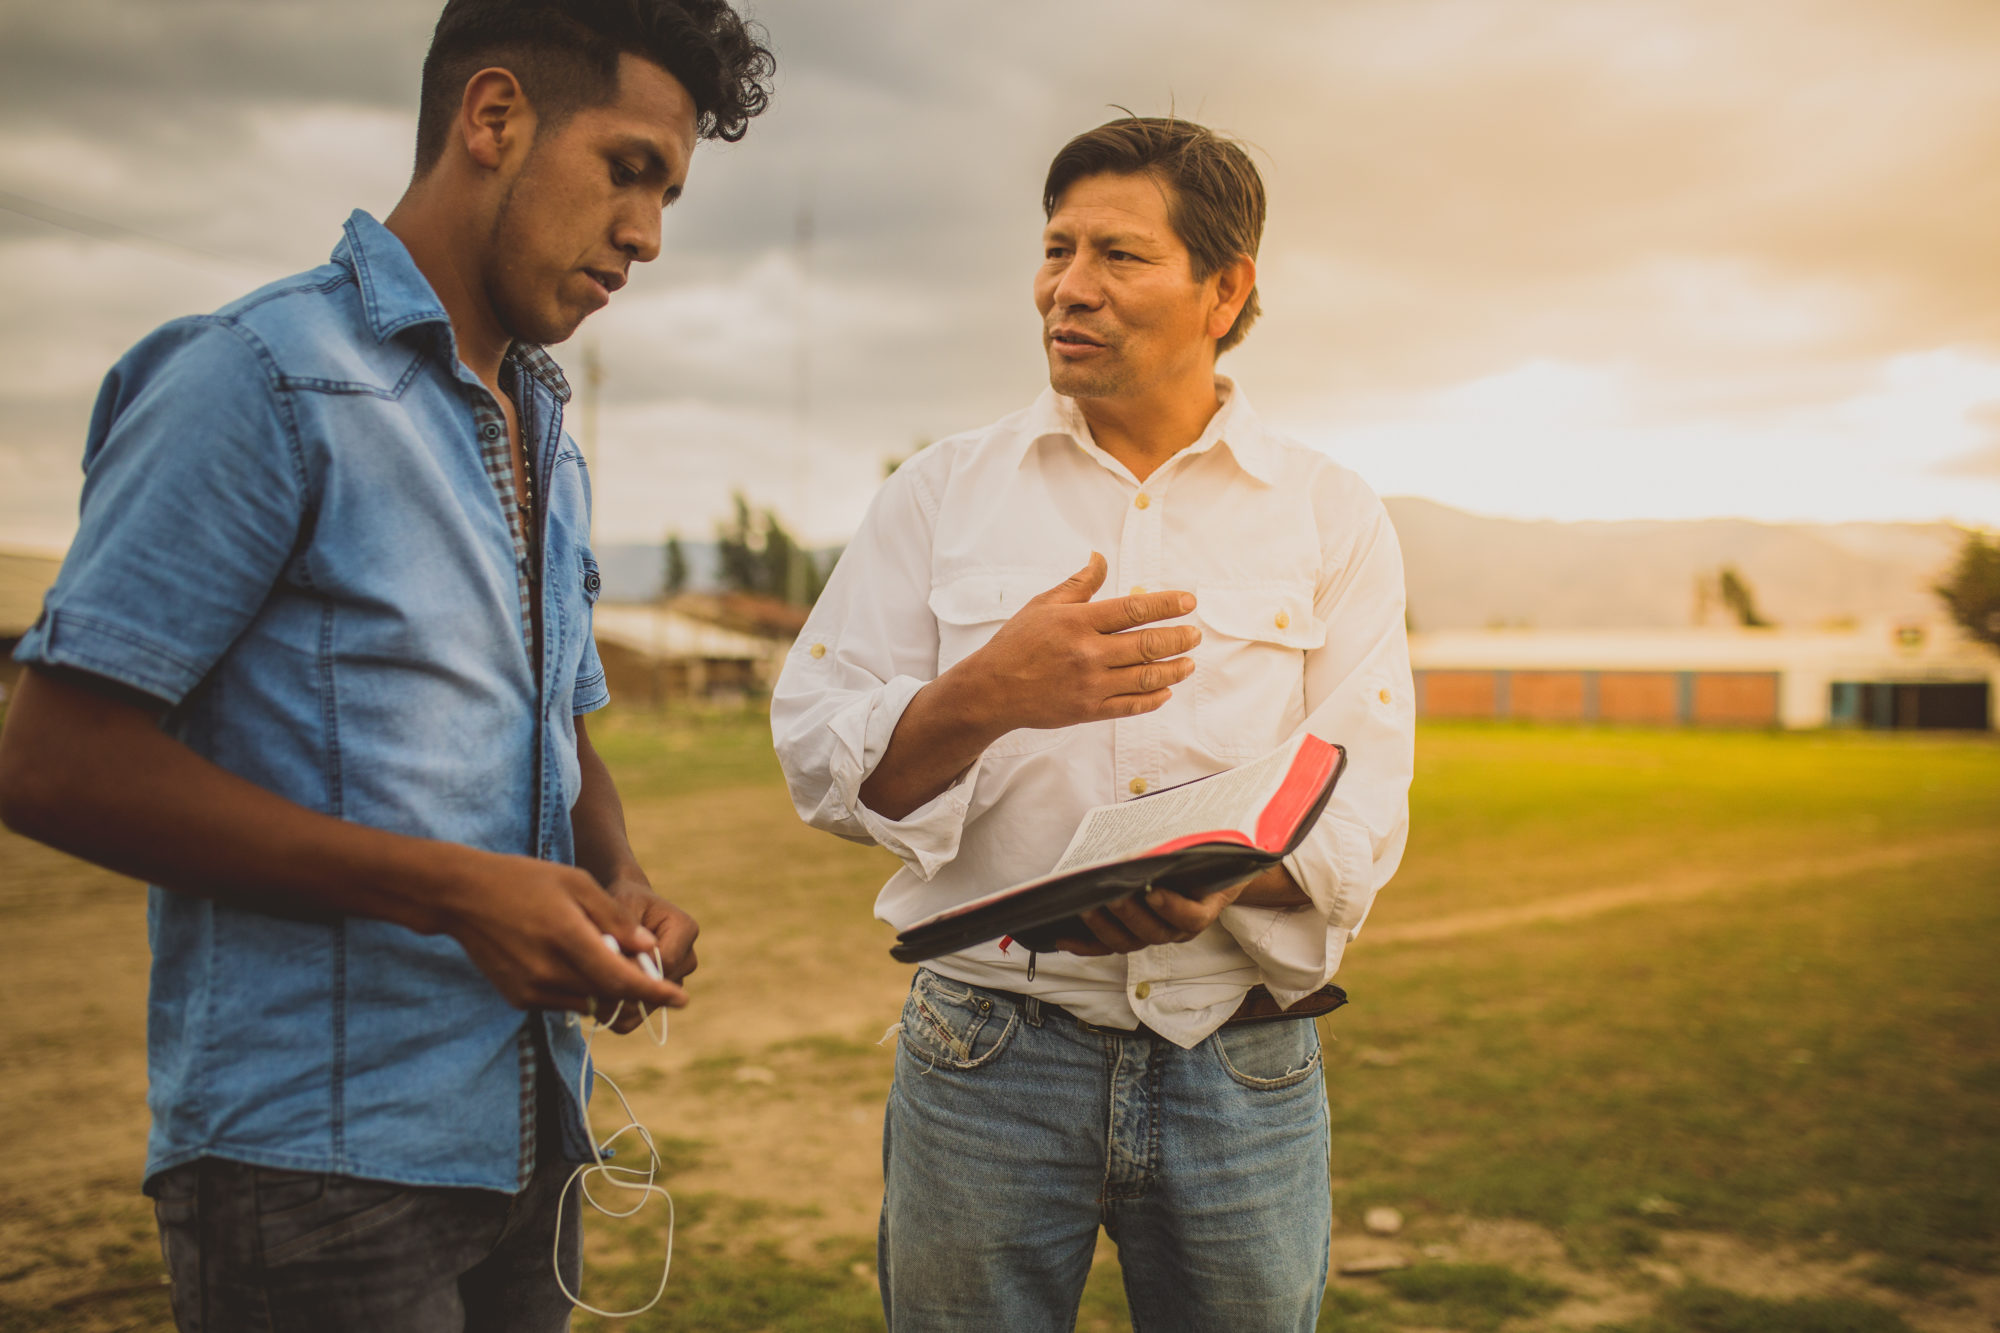 Sharing the Gospel in Huaraz